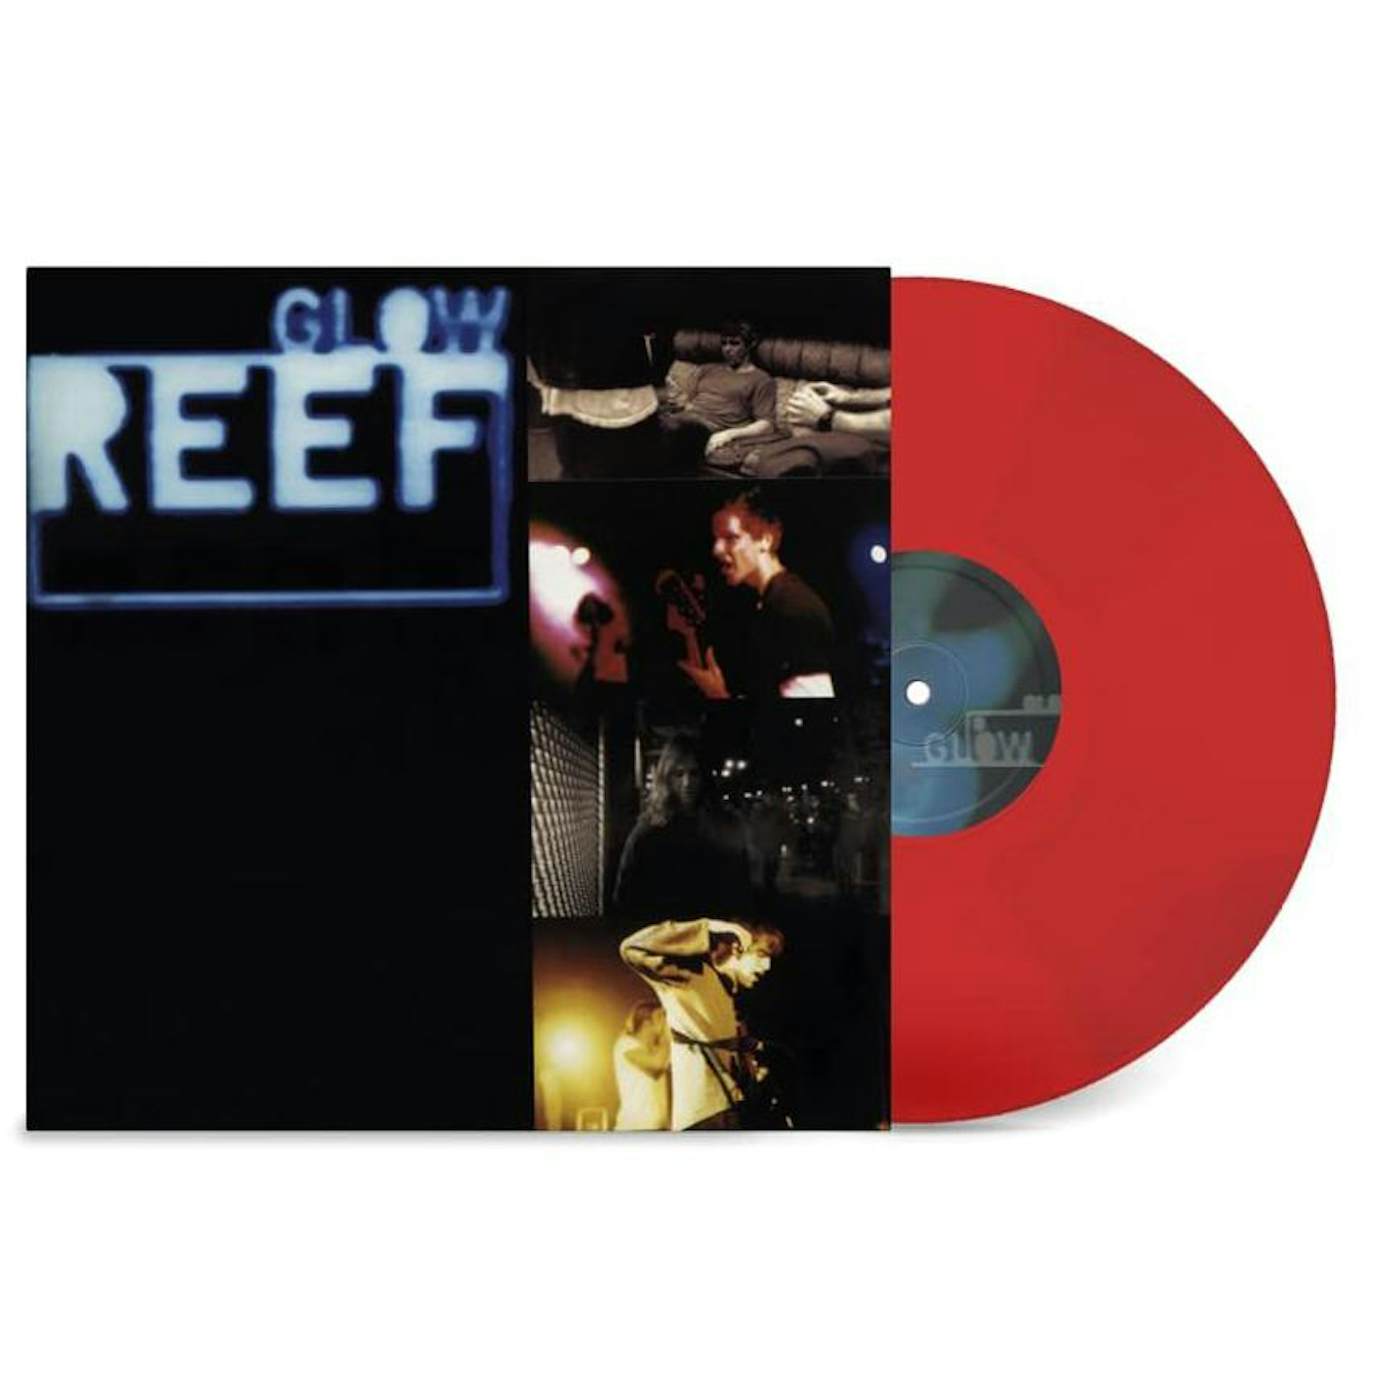 Reef Glow (Transparent Red) Vinyl Record